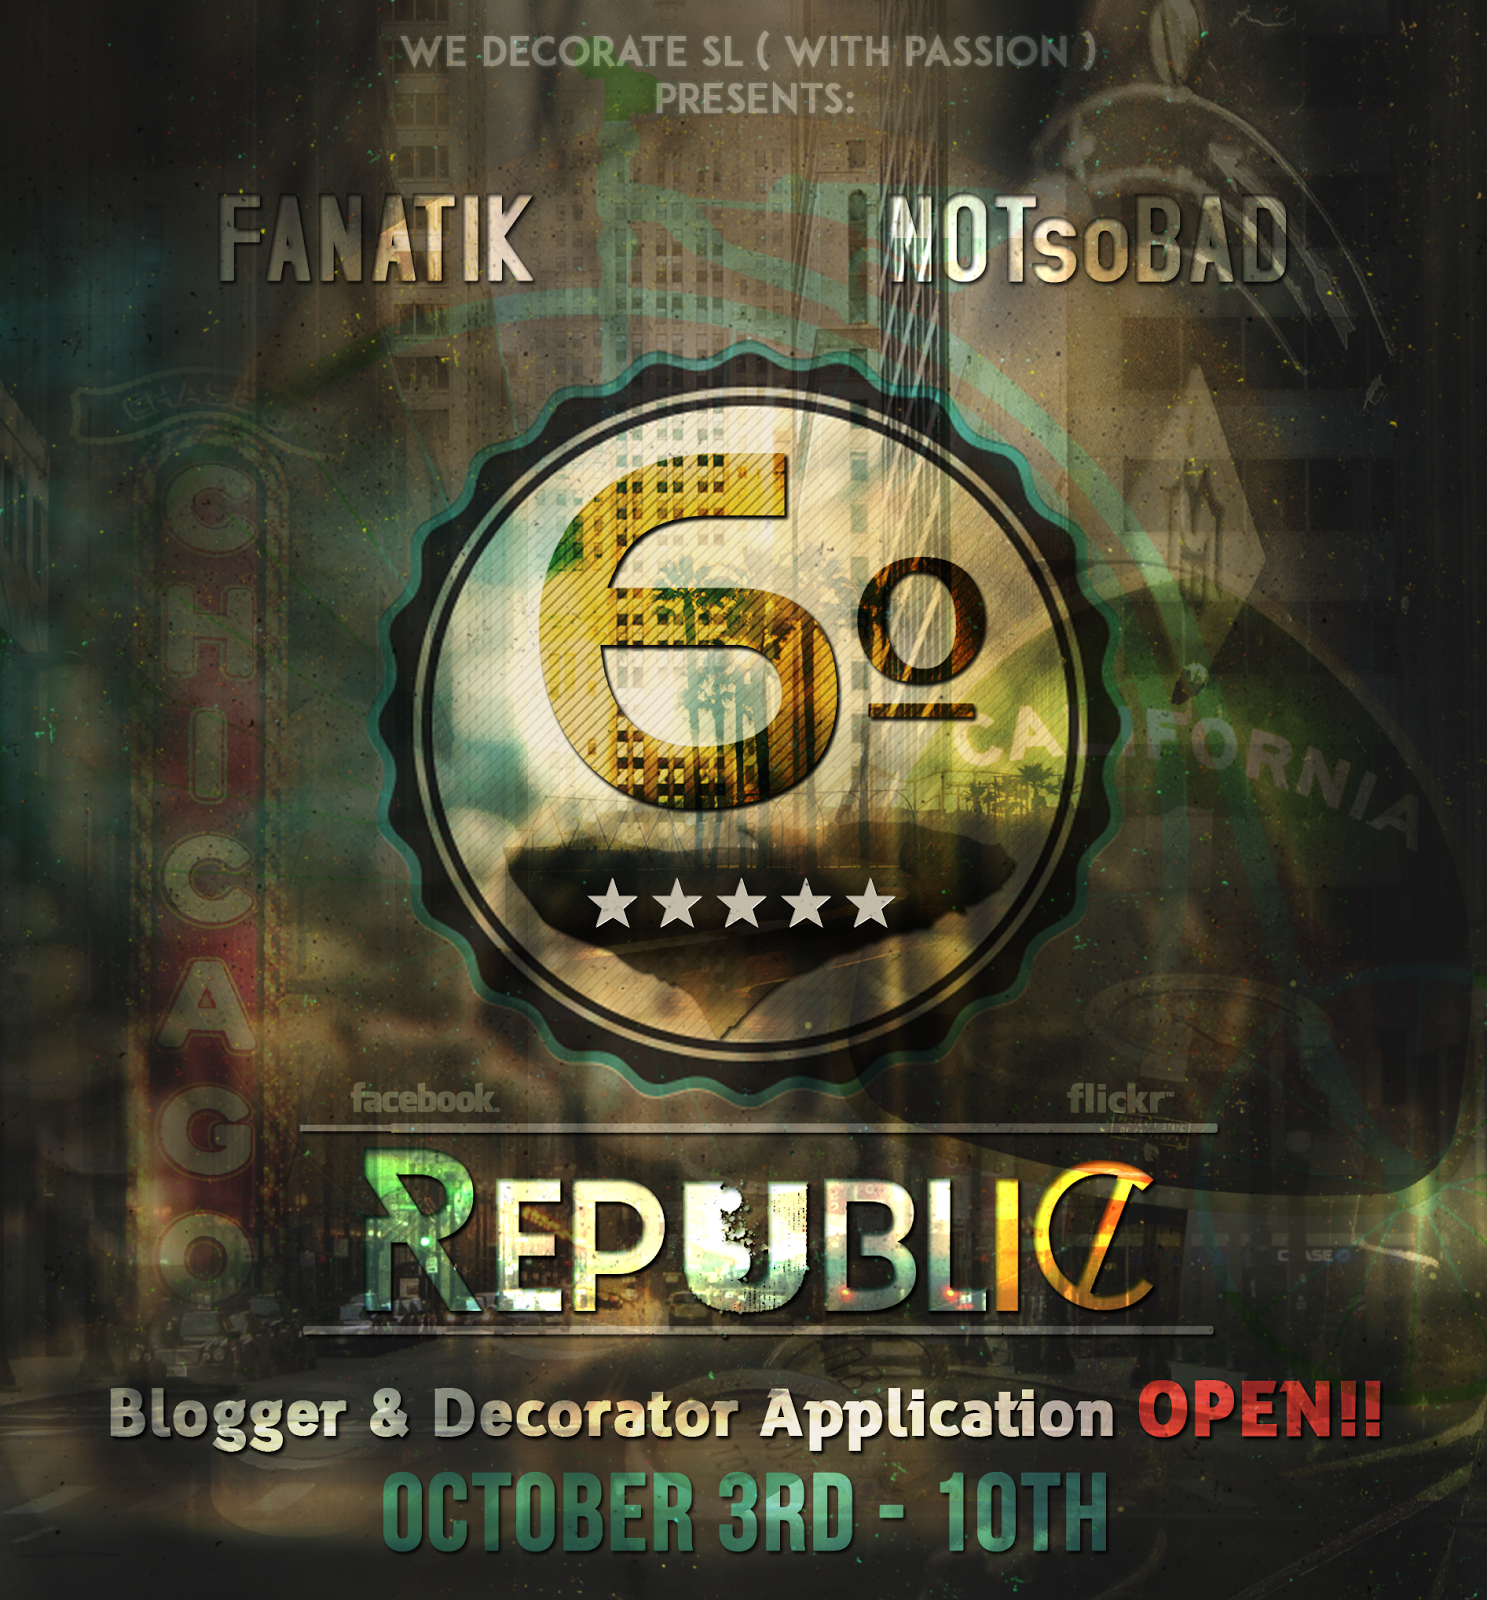 6º Republic Event: Blogger & Decorator Application OPEN!!